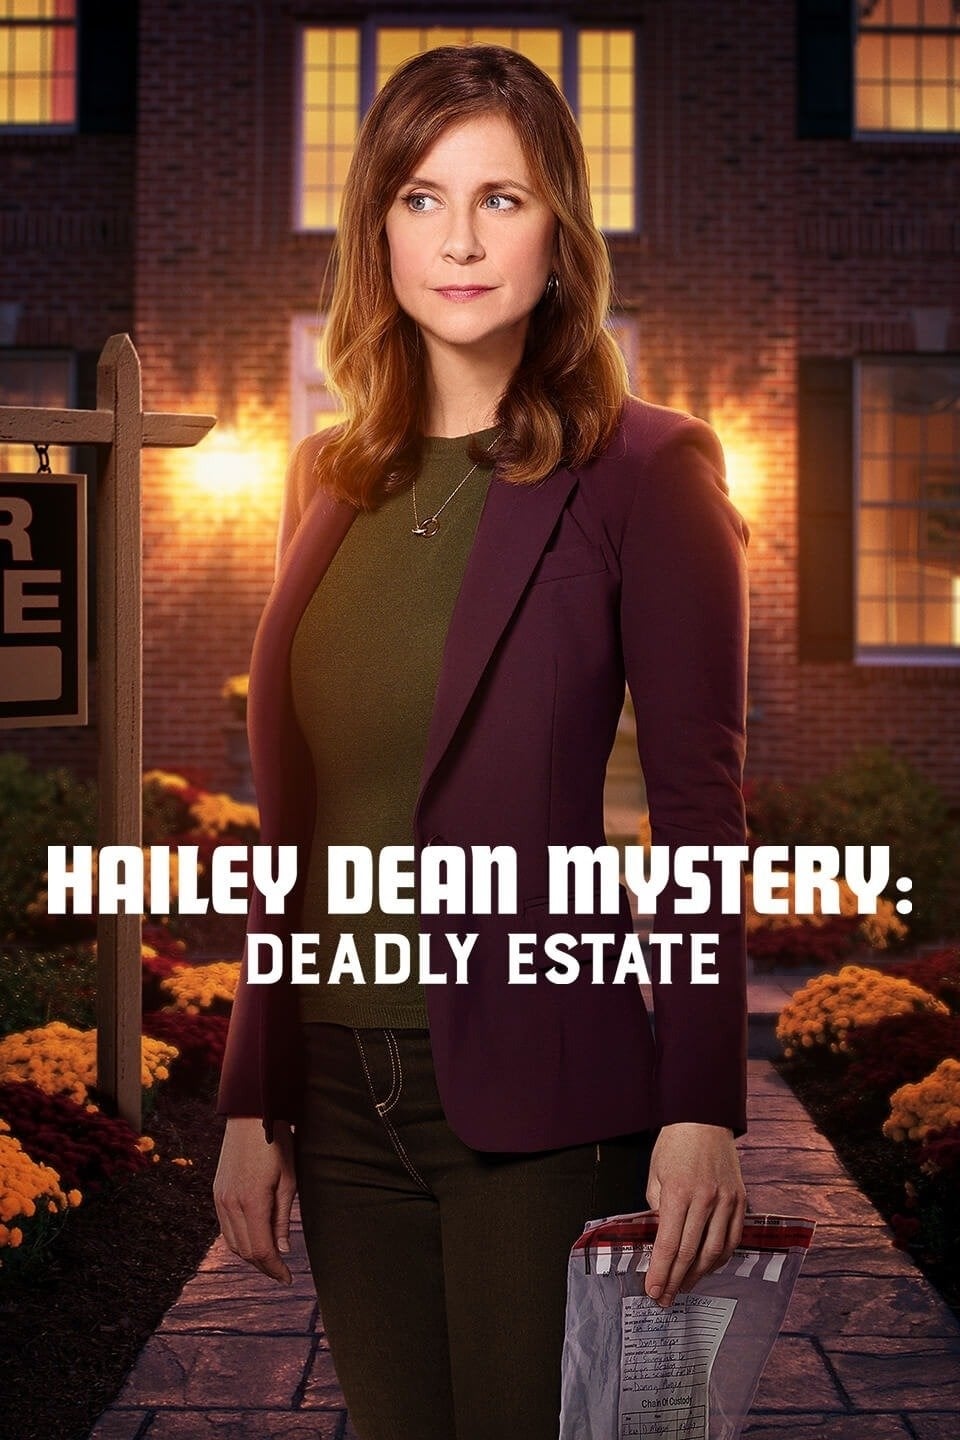 Hailey Dean Mysteries Deadly Estate (2017)